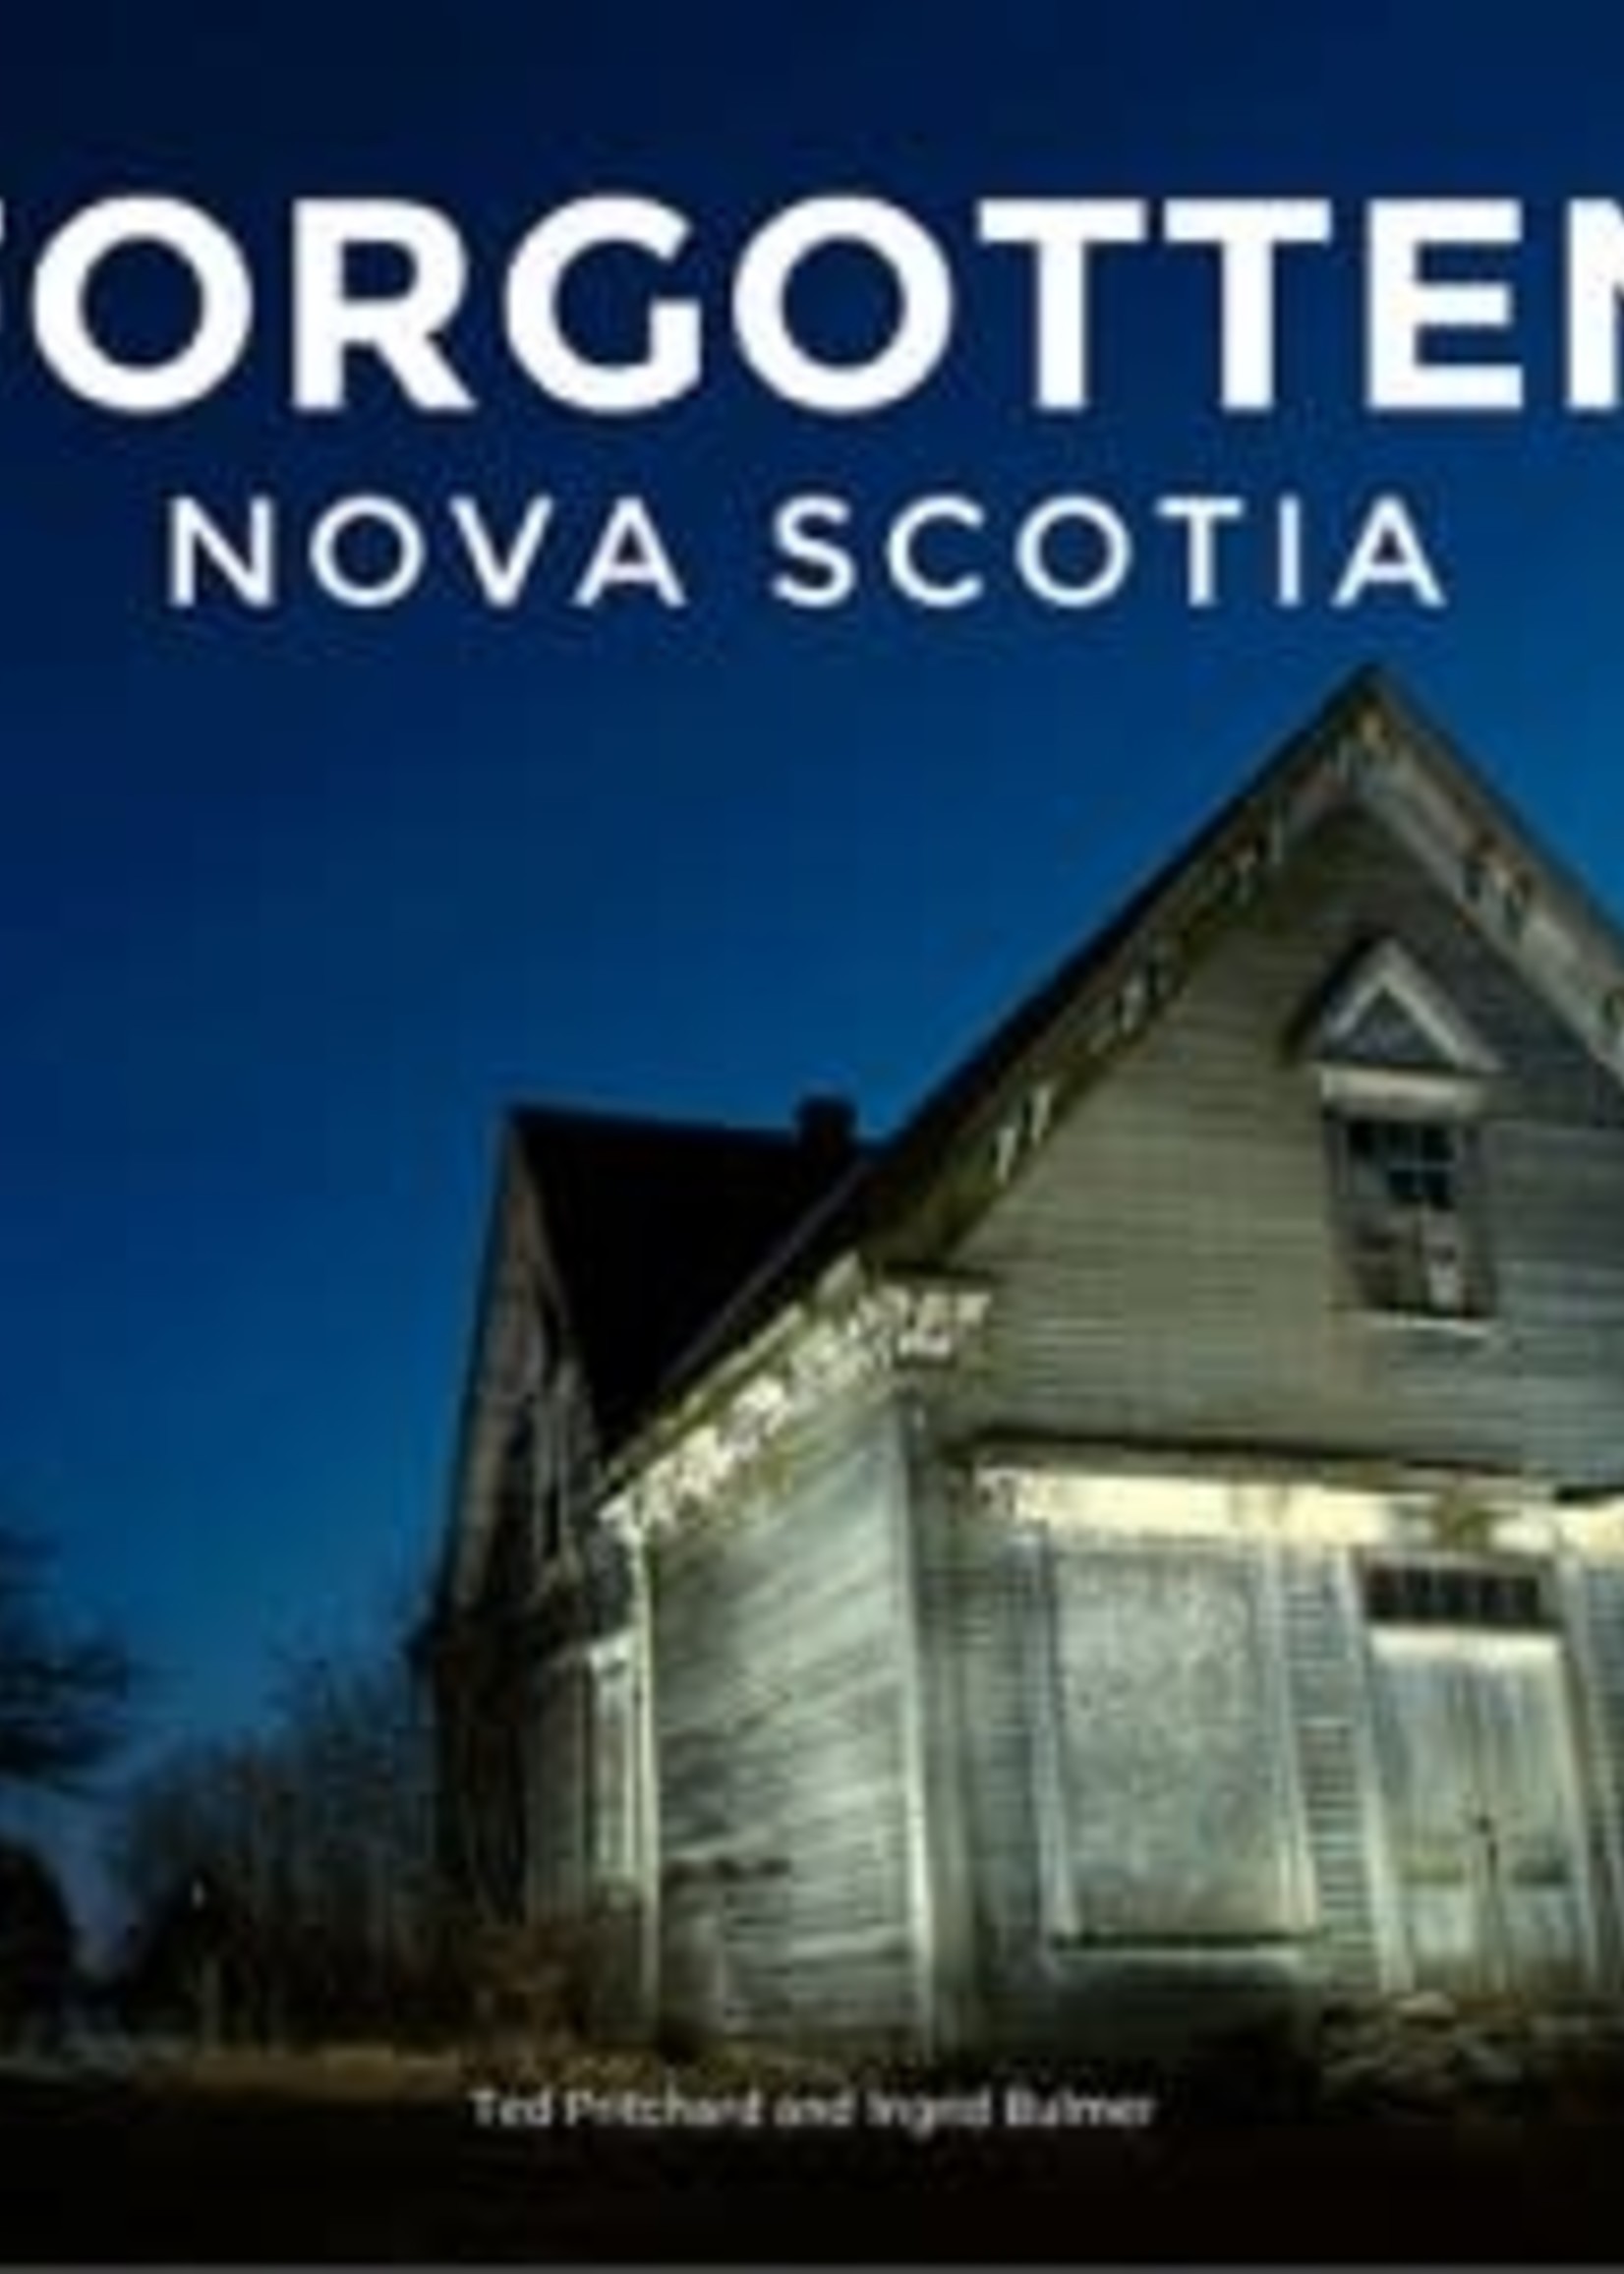 Forgotten Nova Scotia by Ted Pritchard, Ingrid Bulmer